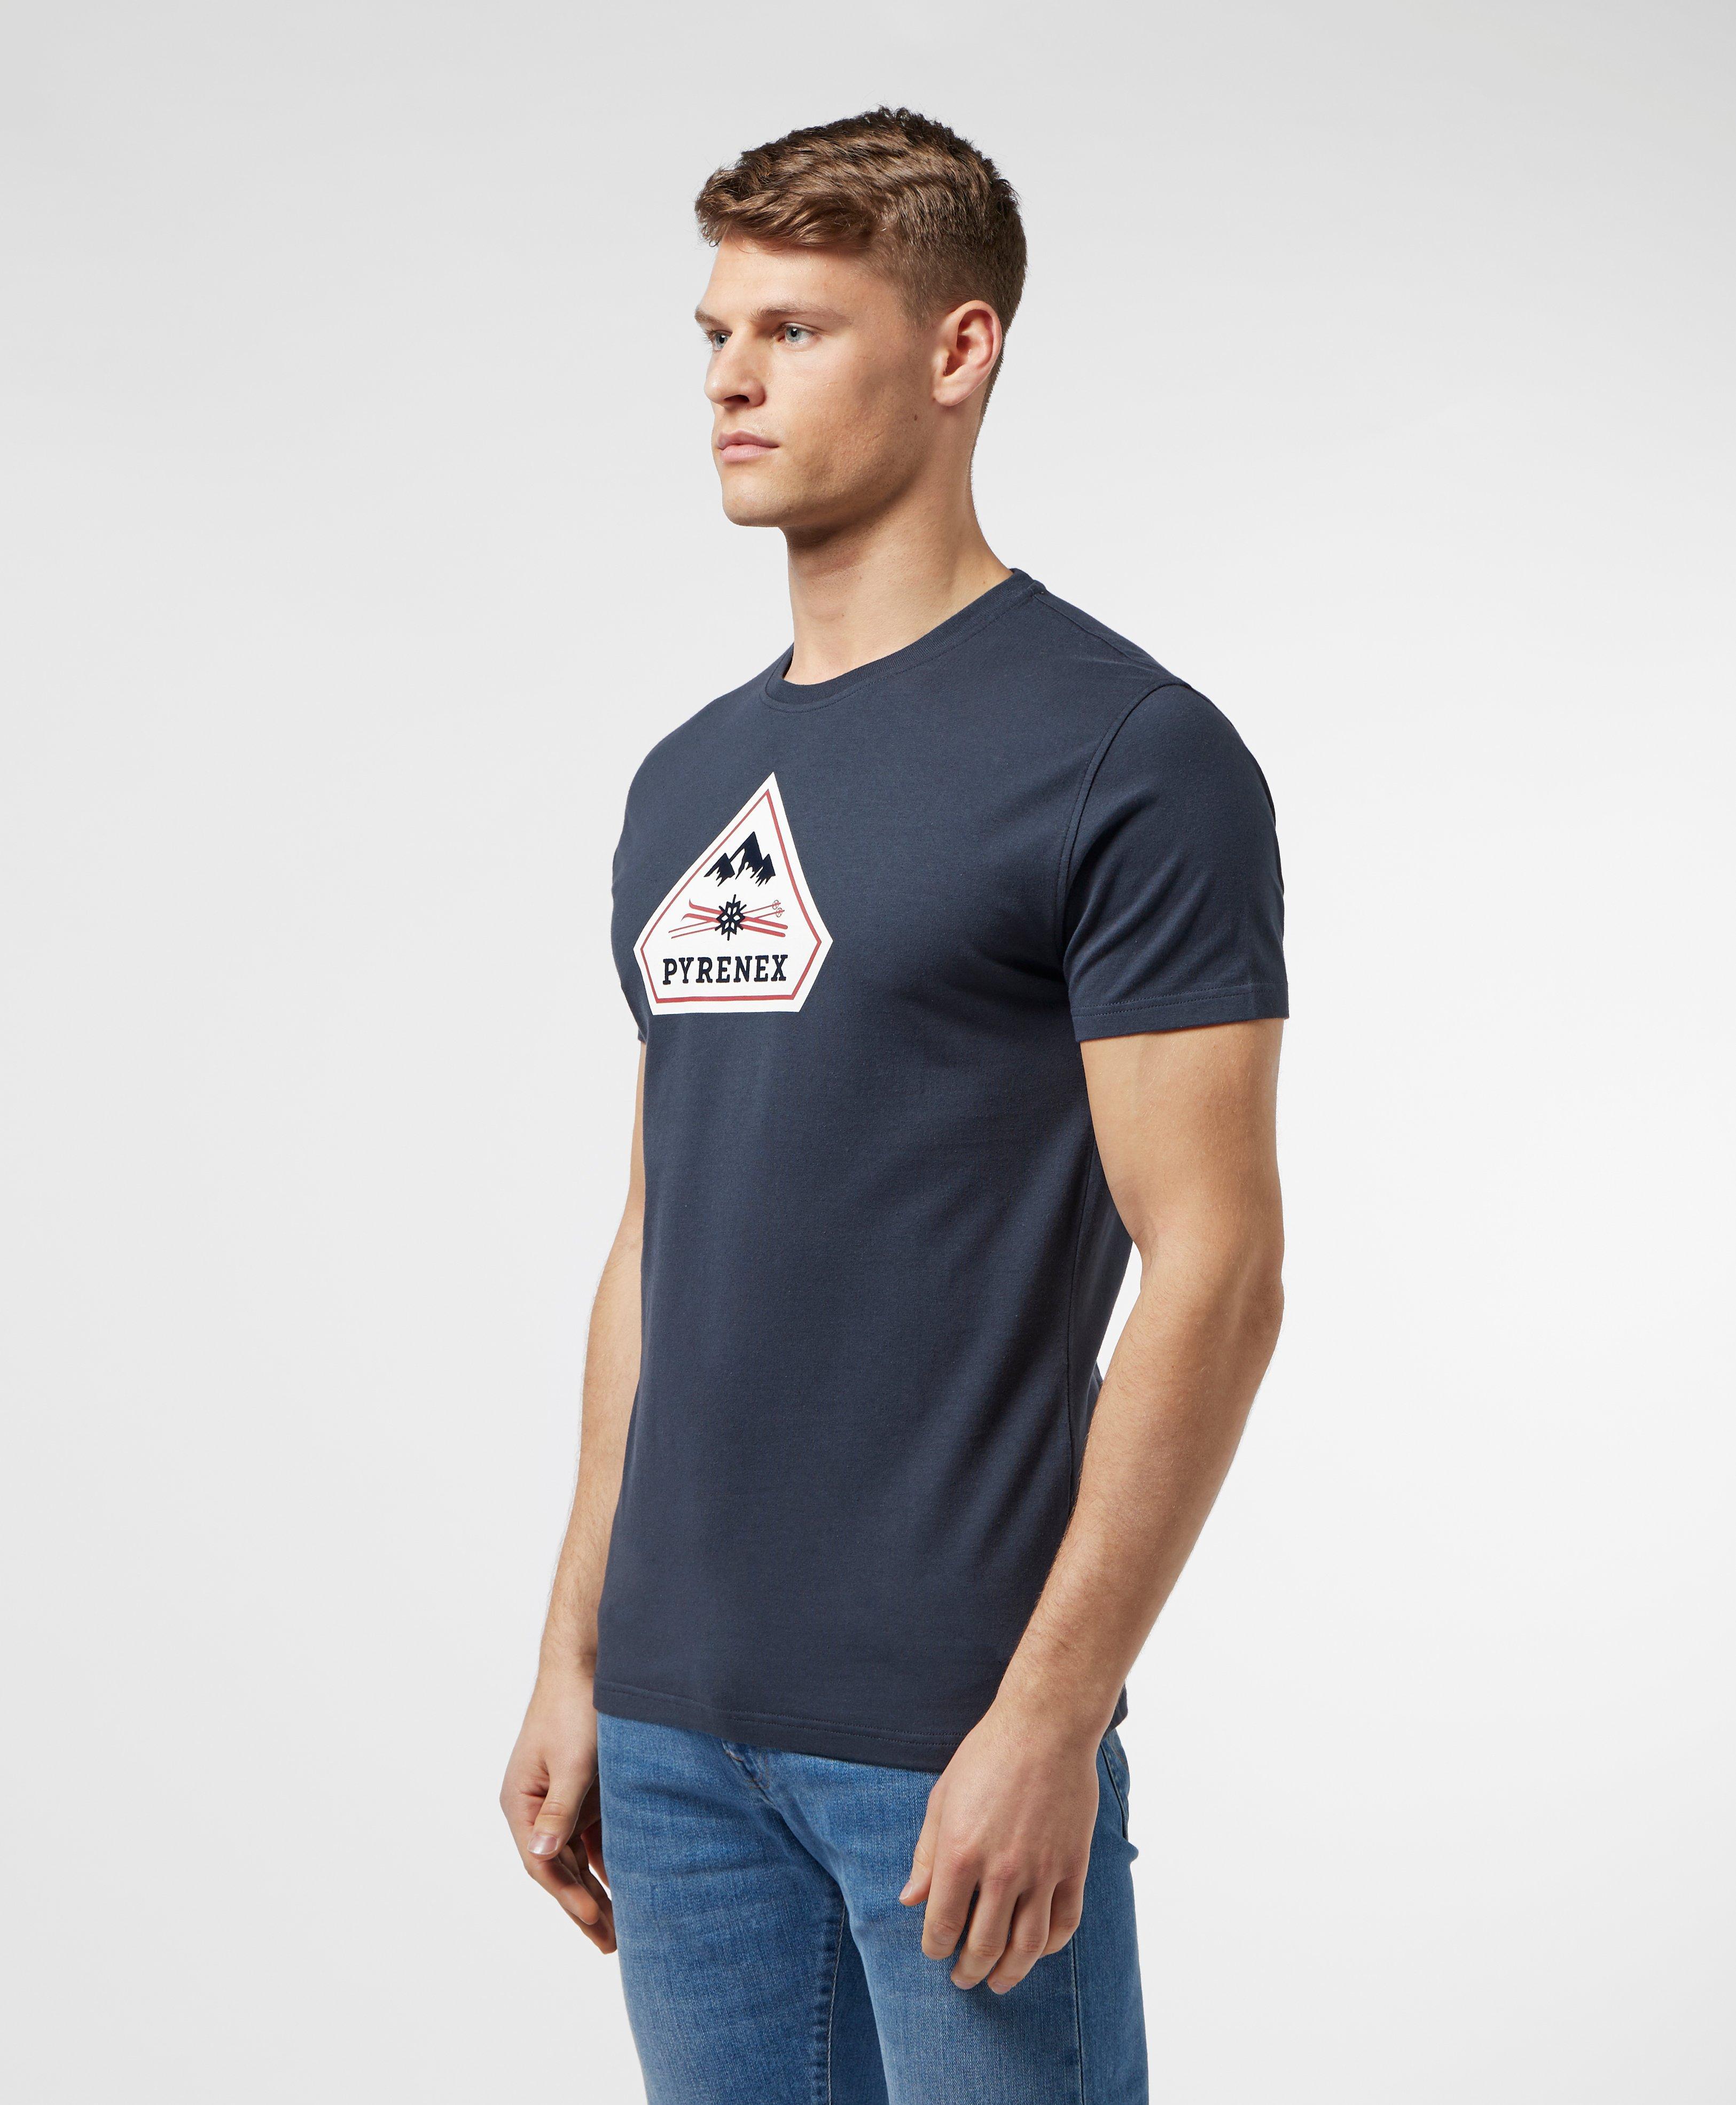 Pyrenex Cotton Karel Short Sleeve T-shirt Navy Blue for Men - Save 43% -  Lyst